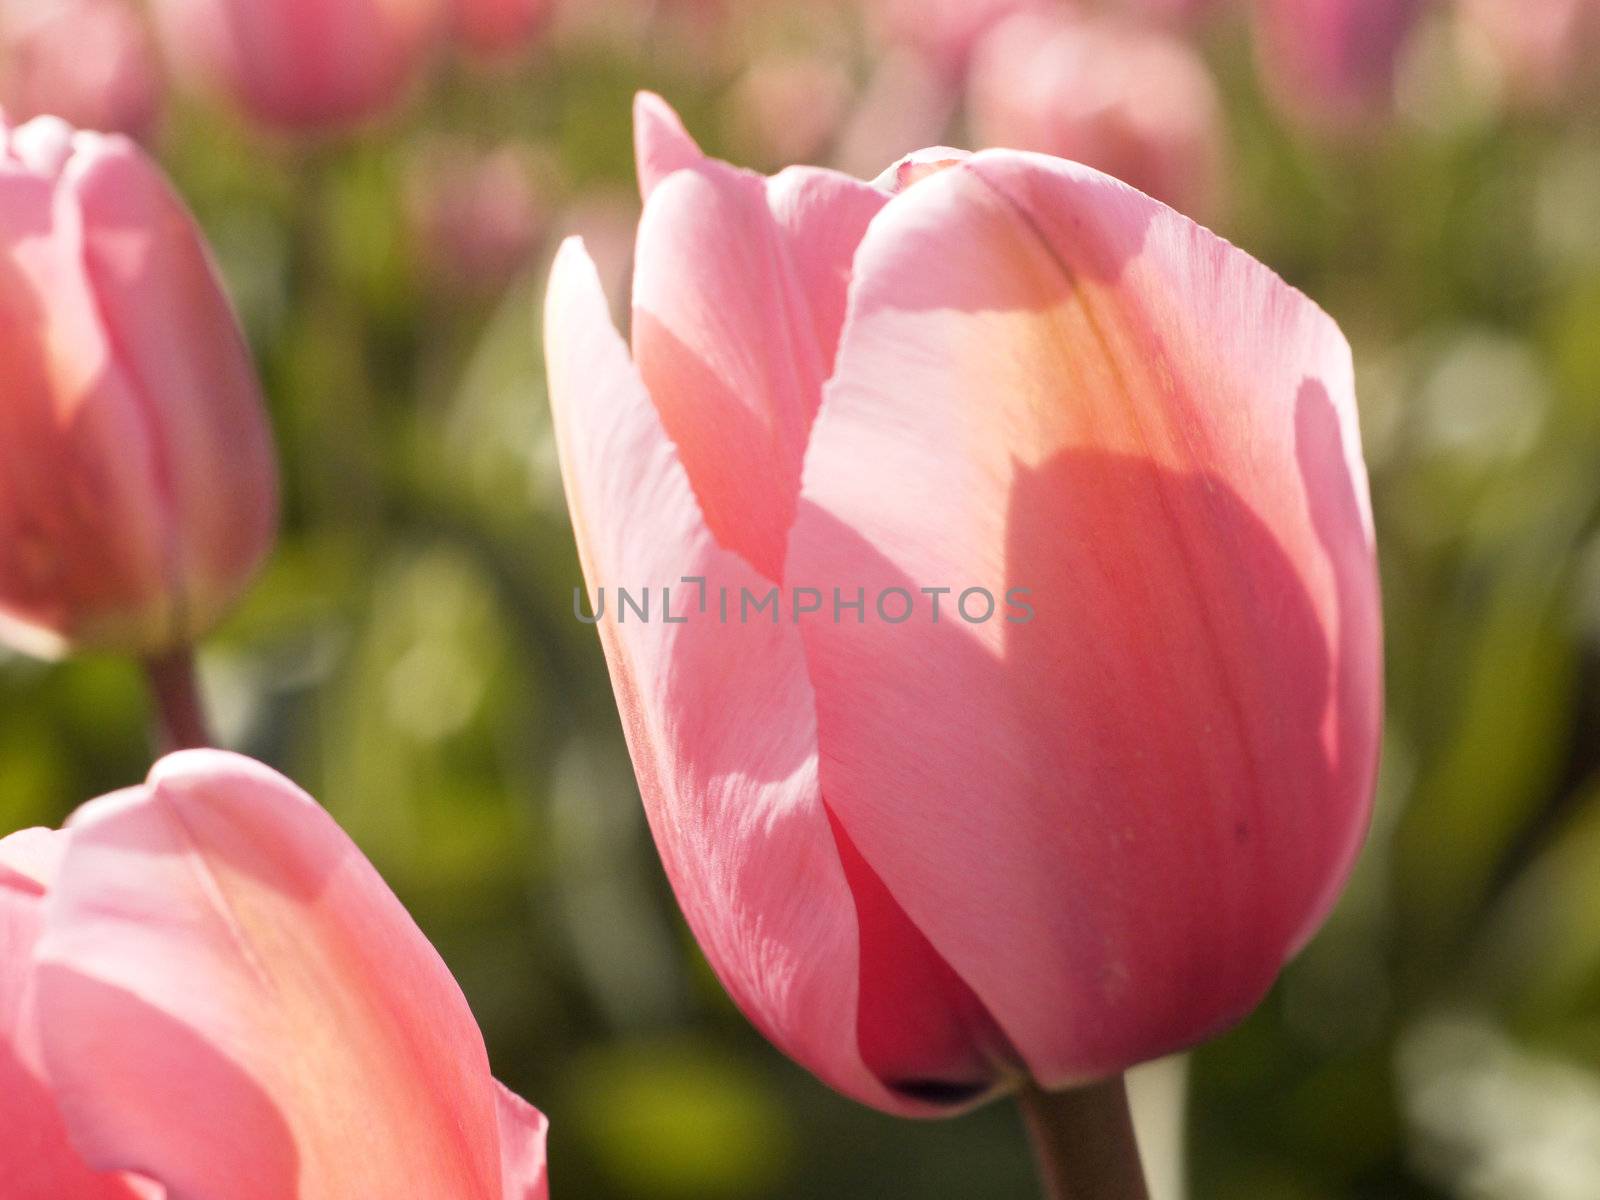 pink tulip in full bloom in a field of flowers